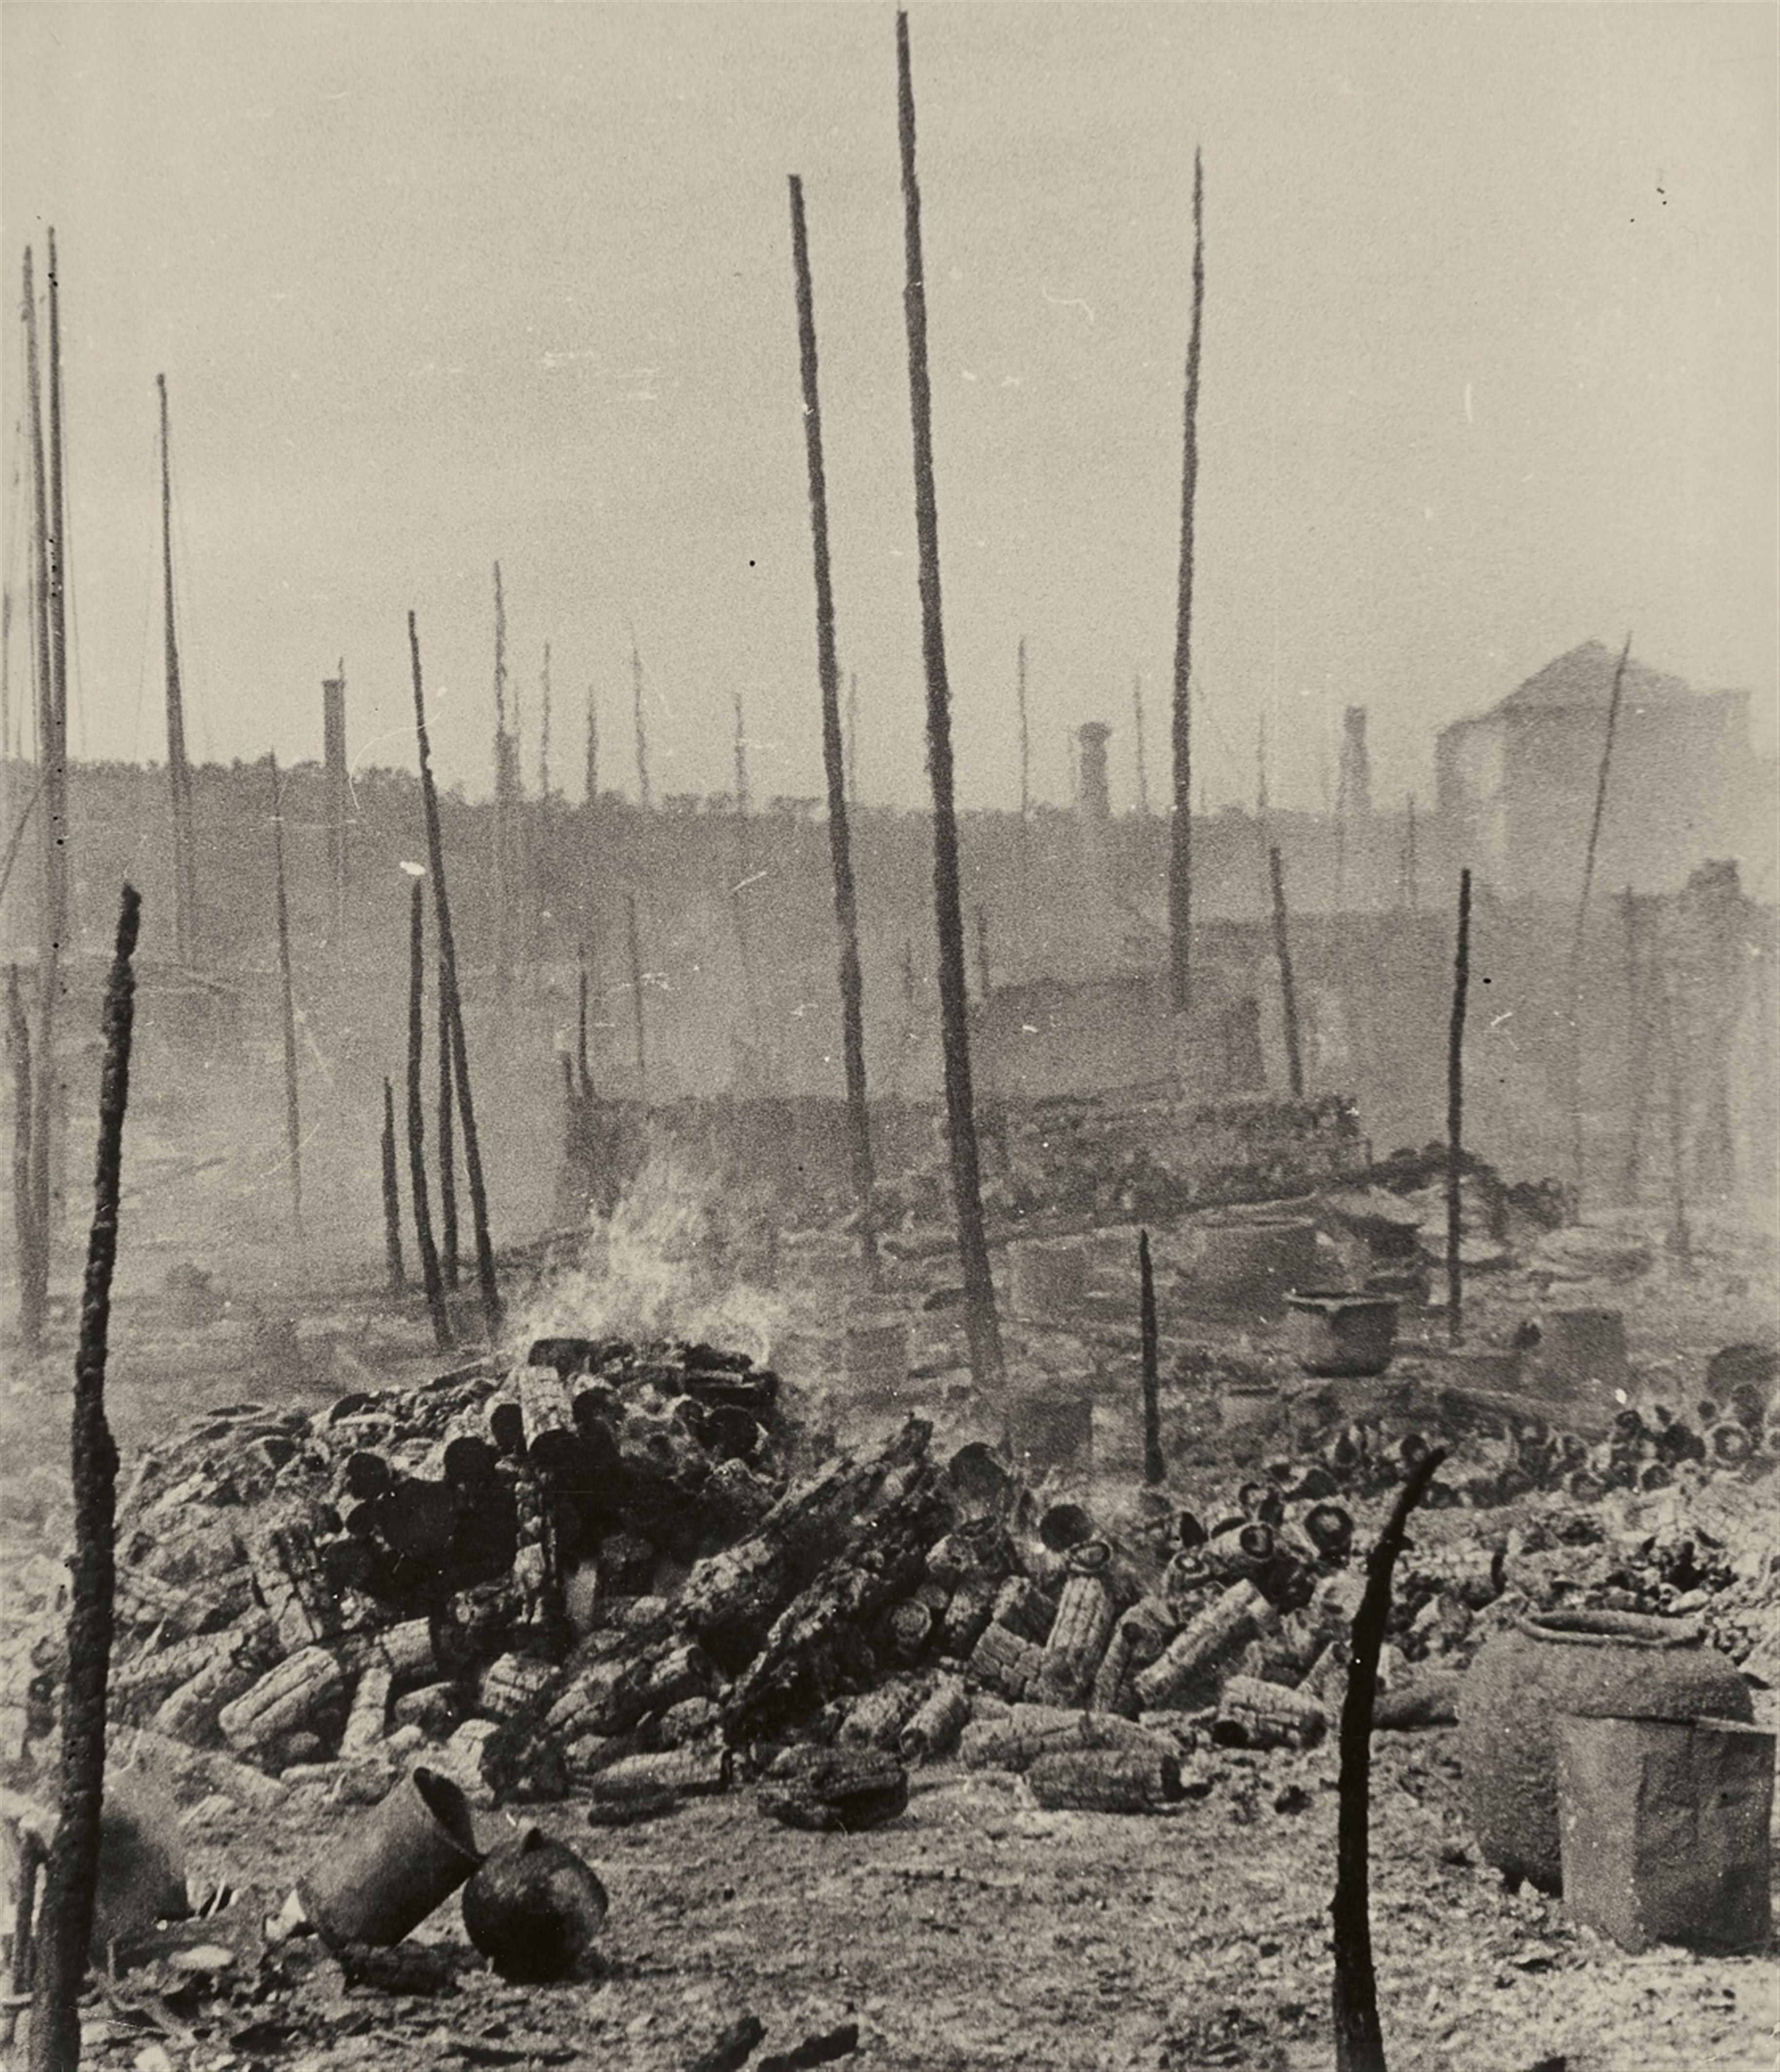 Robert Capa (Endre Ernö Friedmann) - Untitled (Second Sino-Japanese War) - image-1